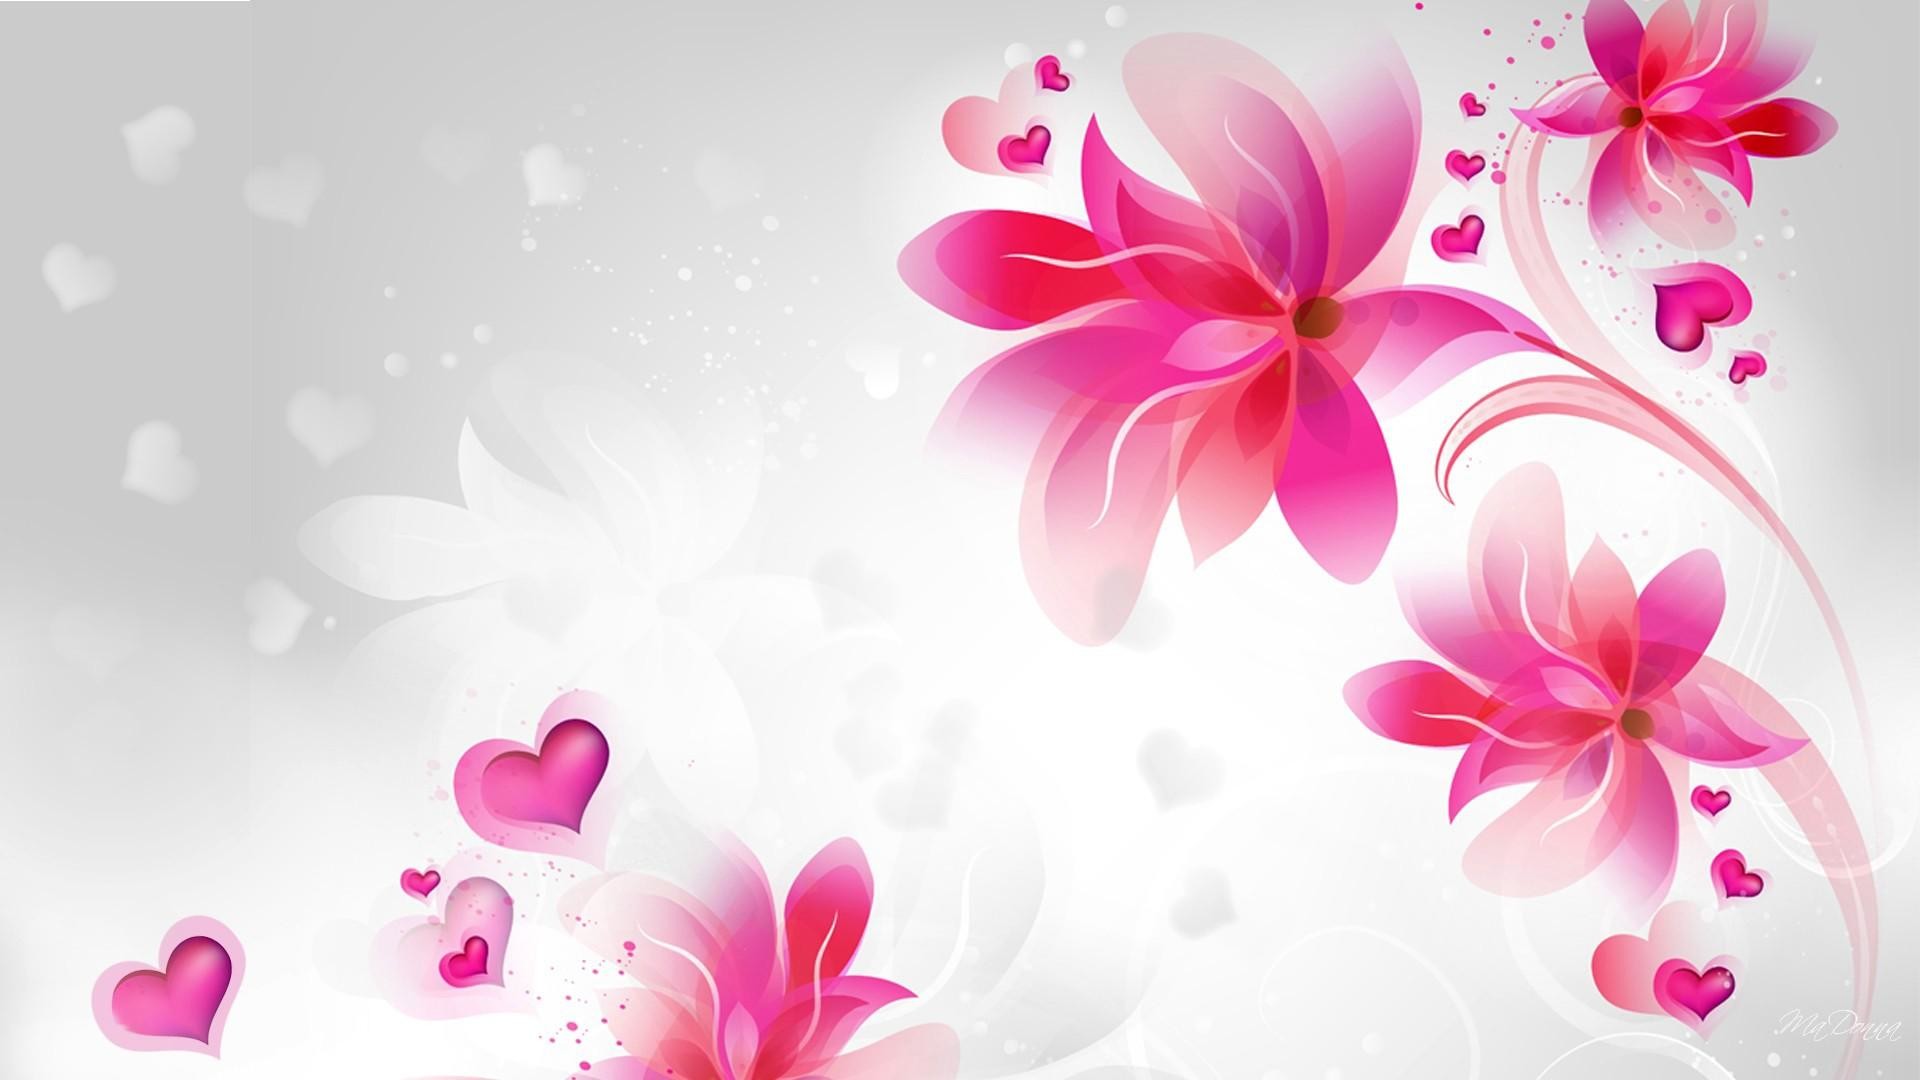 1920x1080, Pink Abstract Flowers Wallpaper - Love Good Morning Sunday - HD Wallpaper 